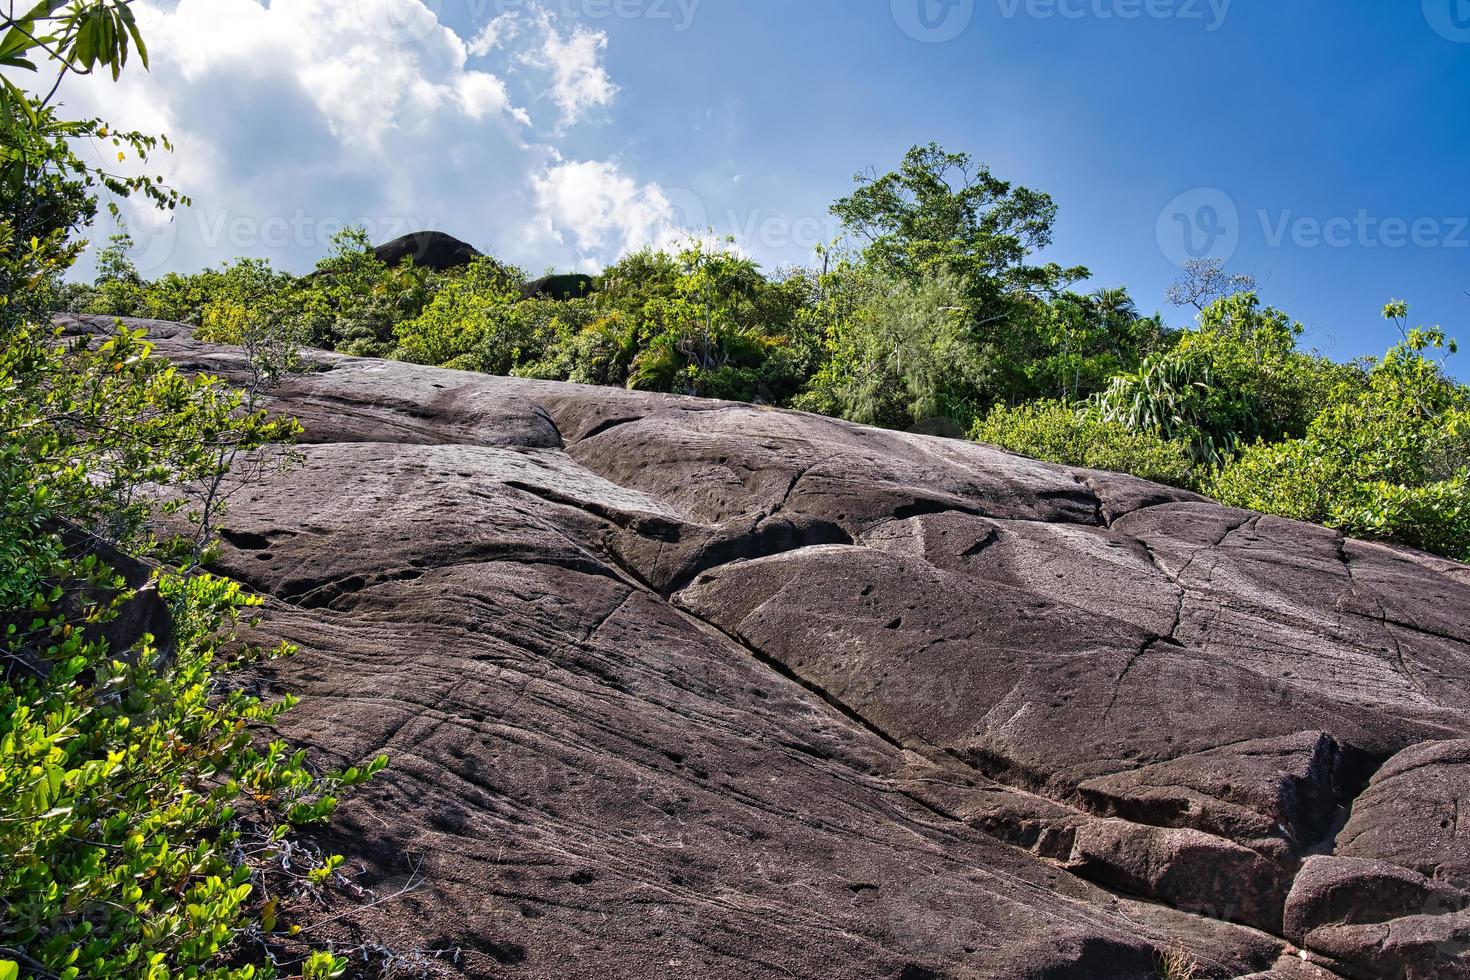 anse principal natureza trilha enorme Rocha pedregulhos e coco ameixa árvores, mahe seychelles foto